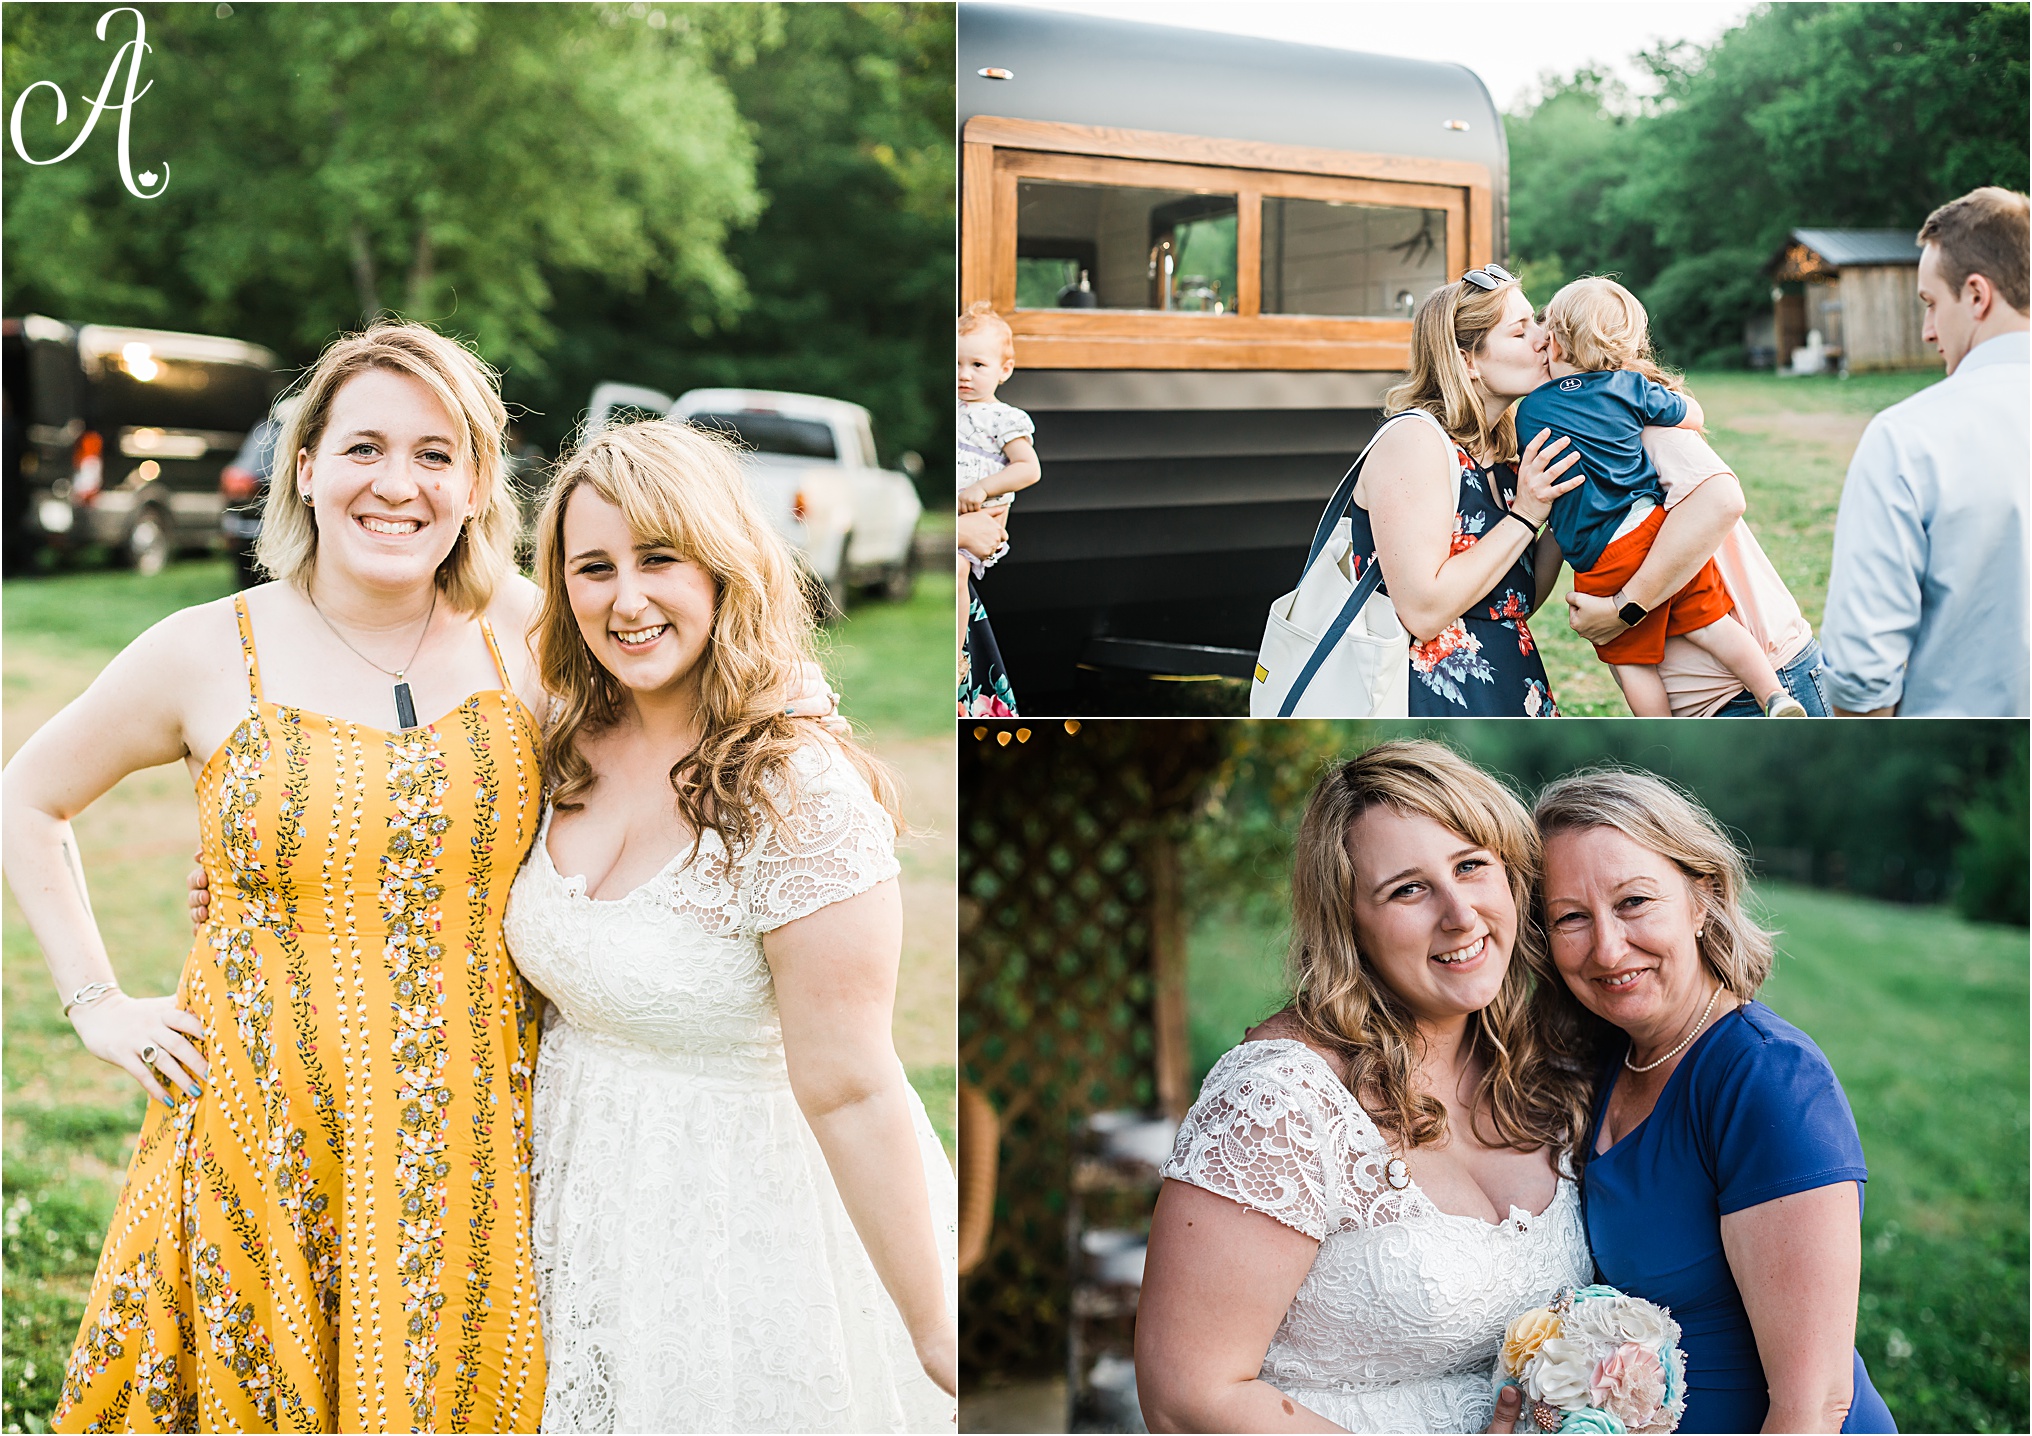 Amber Lowe Photo,Knoxville Wedding Photographer,Madison Creek Farms,Nashville Photographer,Nashville Wedding Photographer,Photographer,Your Wedding by Lauren,